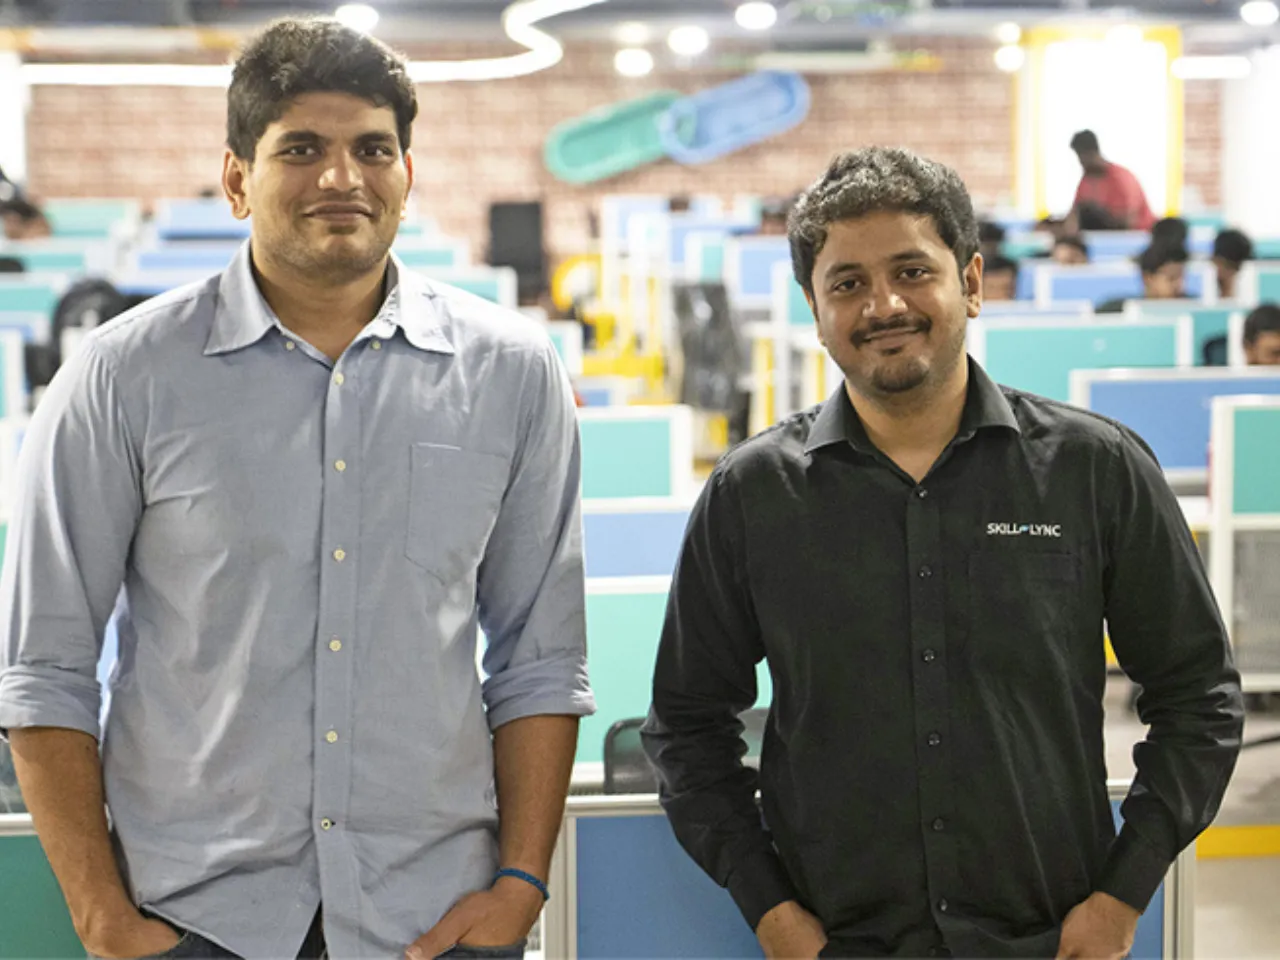 Skill-Lync Co-founders Paneerselvam and Sarangarajan V Iyengar